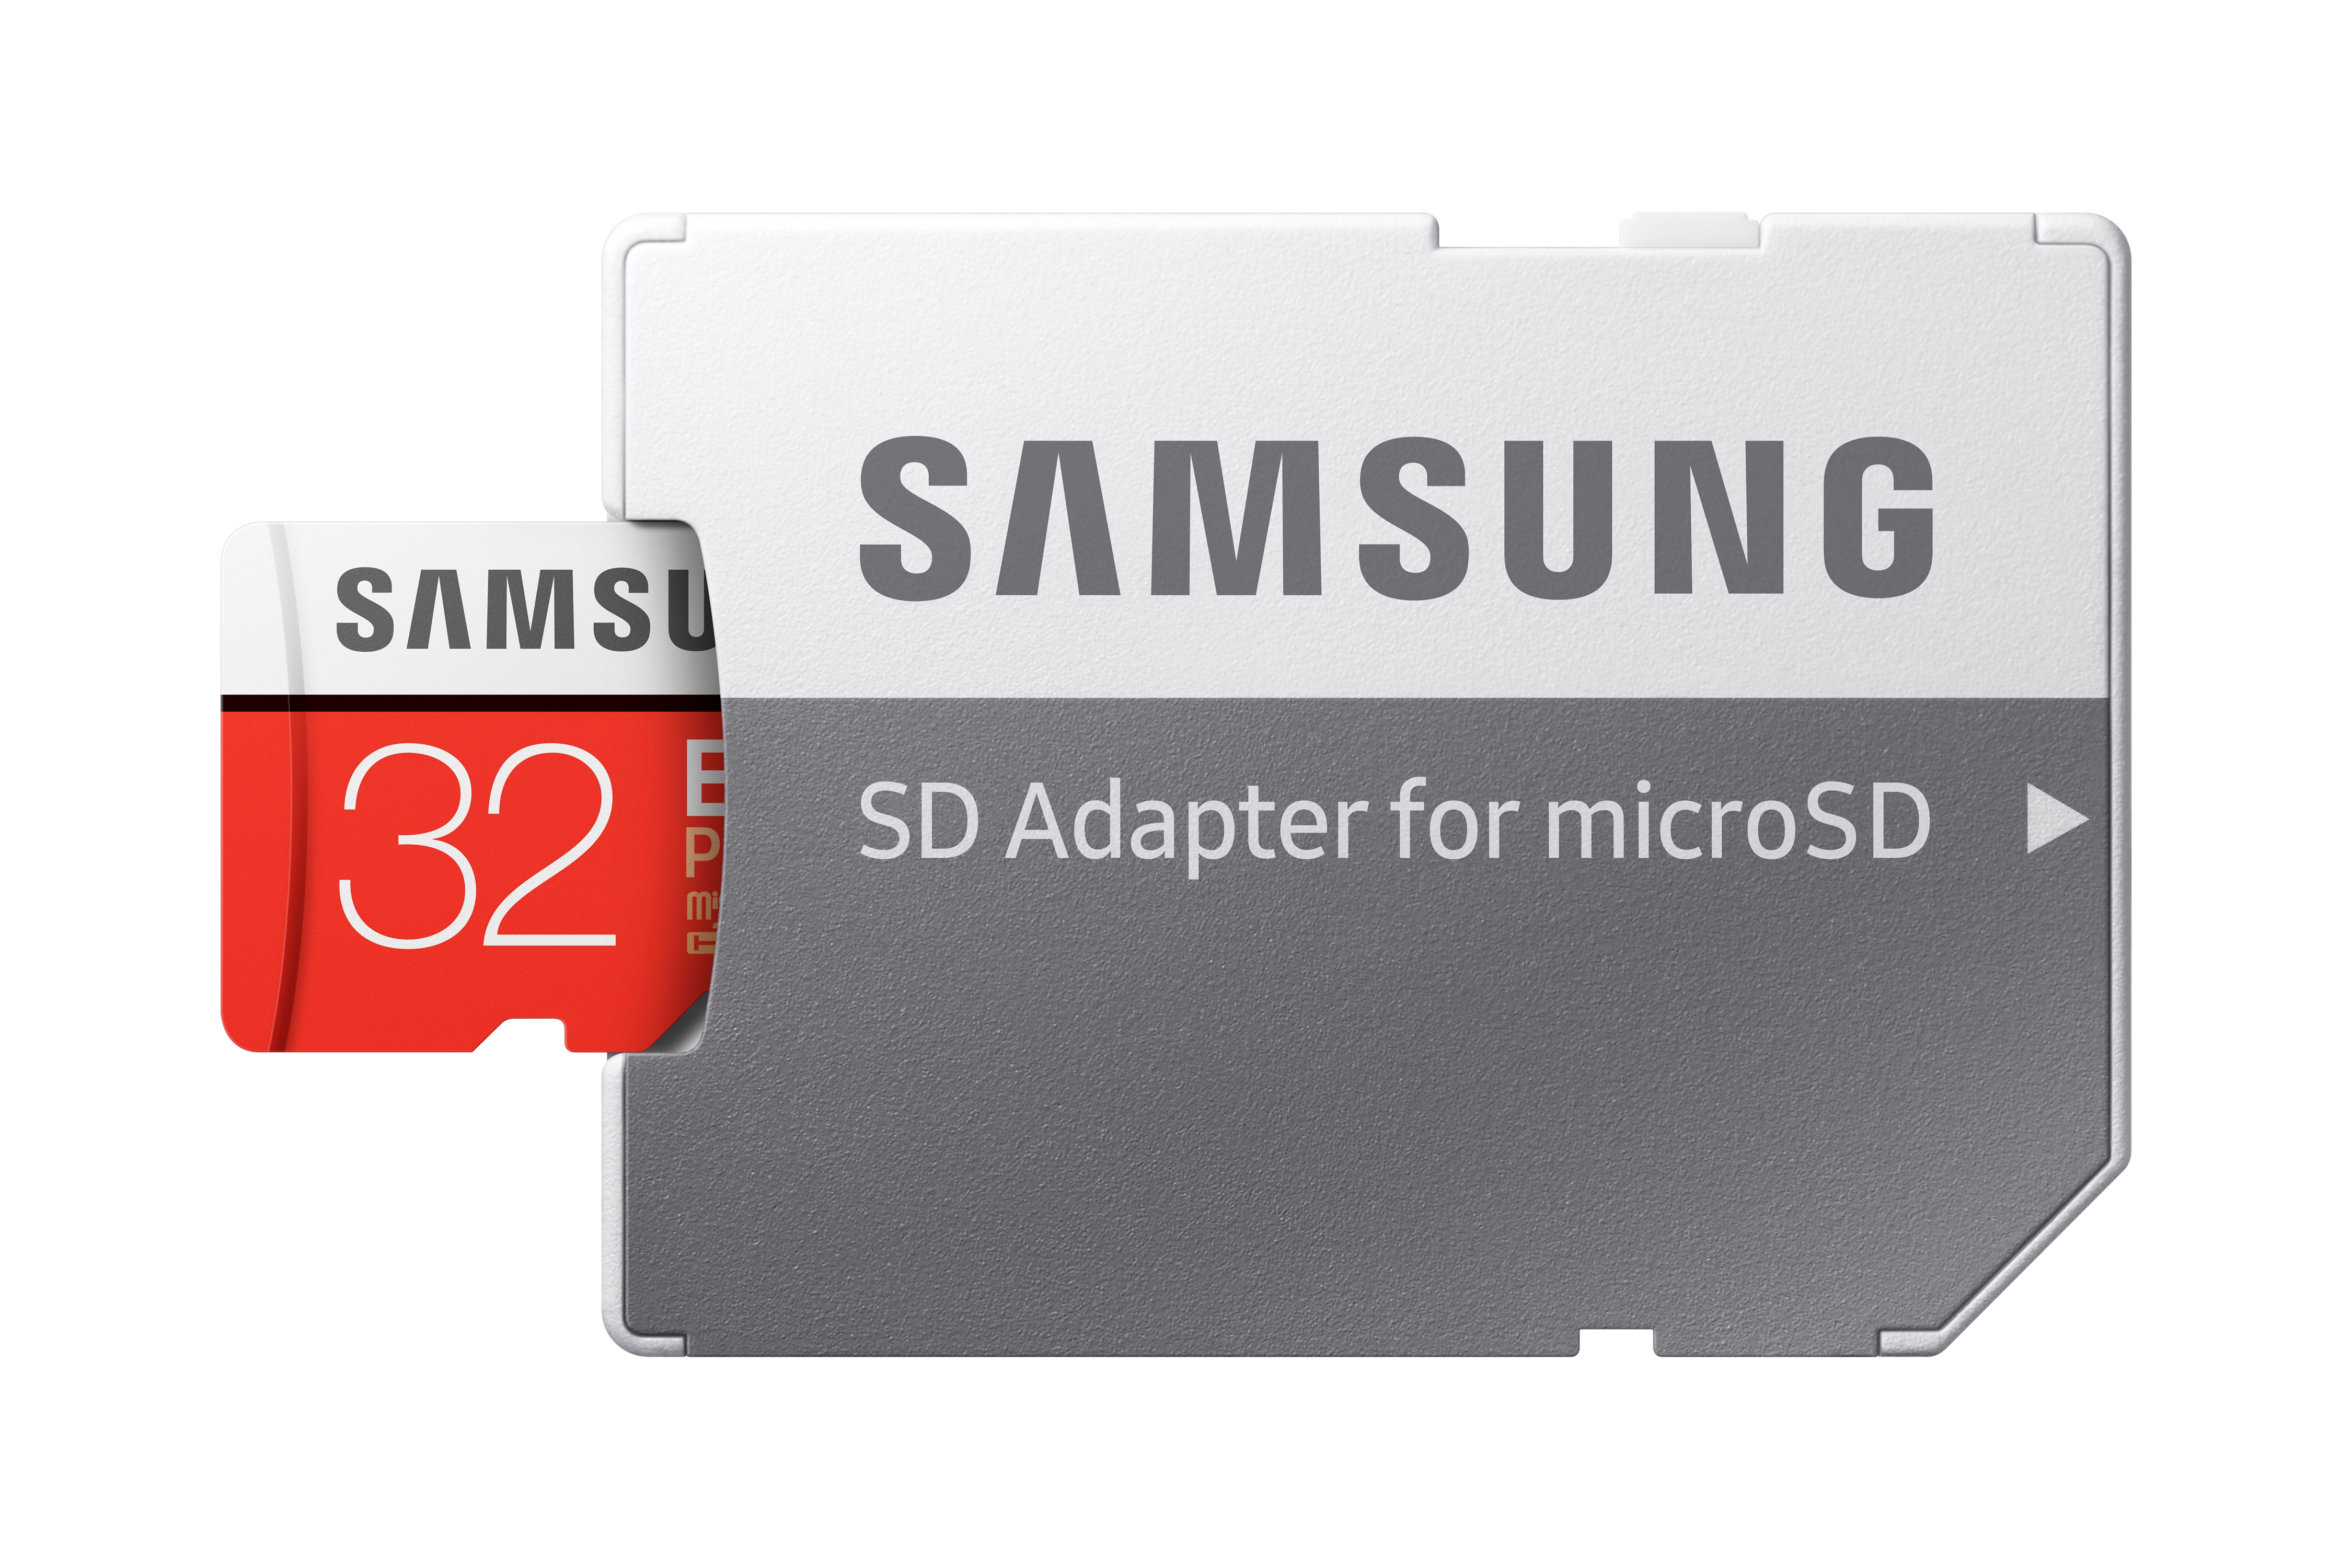 Thumbnail image of EVO Plus microSD Memory Card 32GB